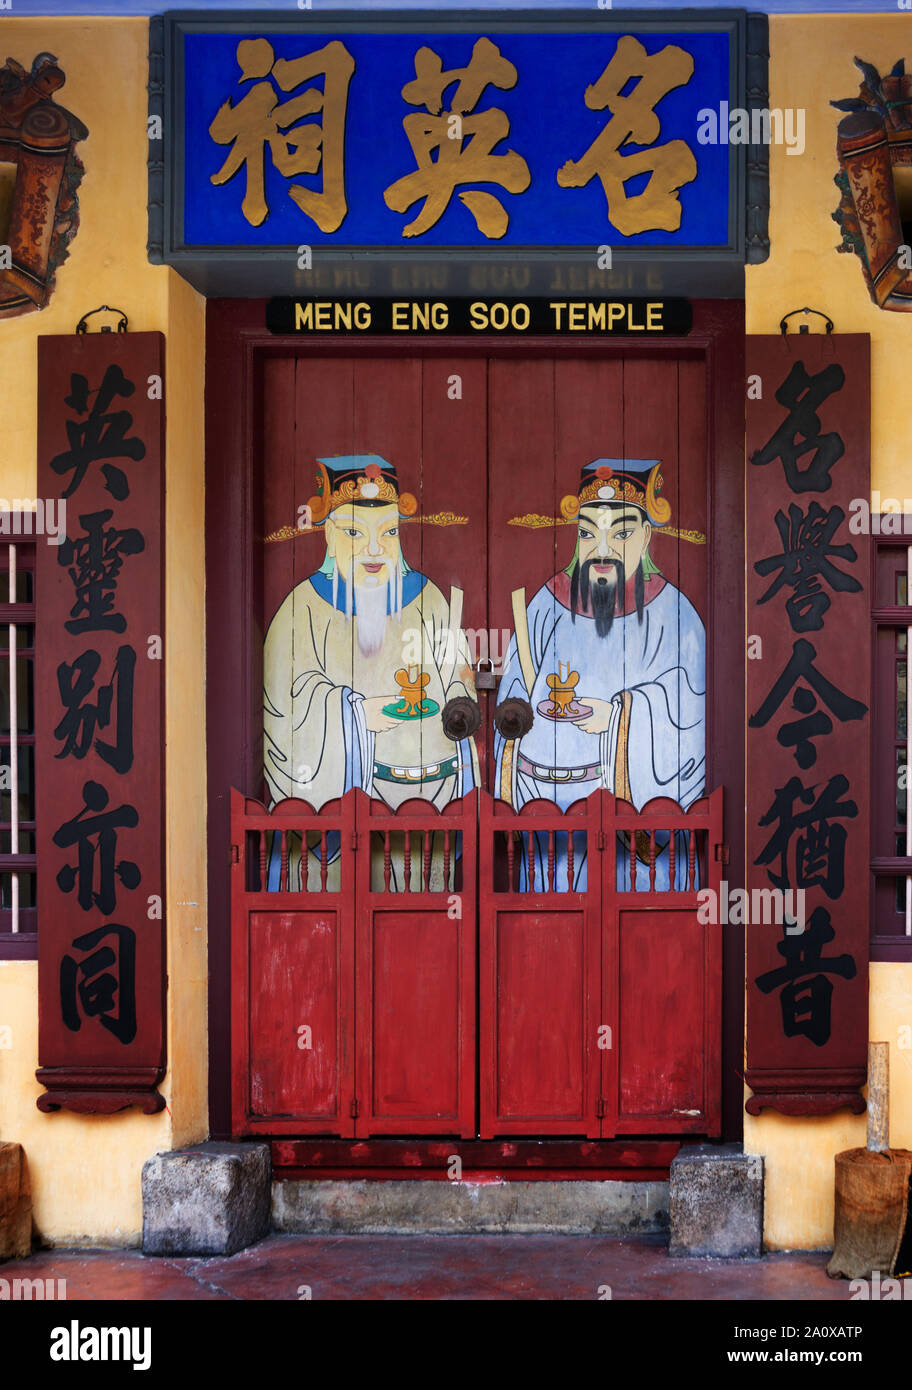 Porta, Meng Eng Soo tempio, Jl. Pintal Tali, Georgetown, Penang Foto Stock